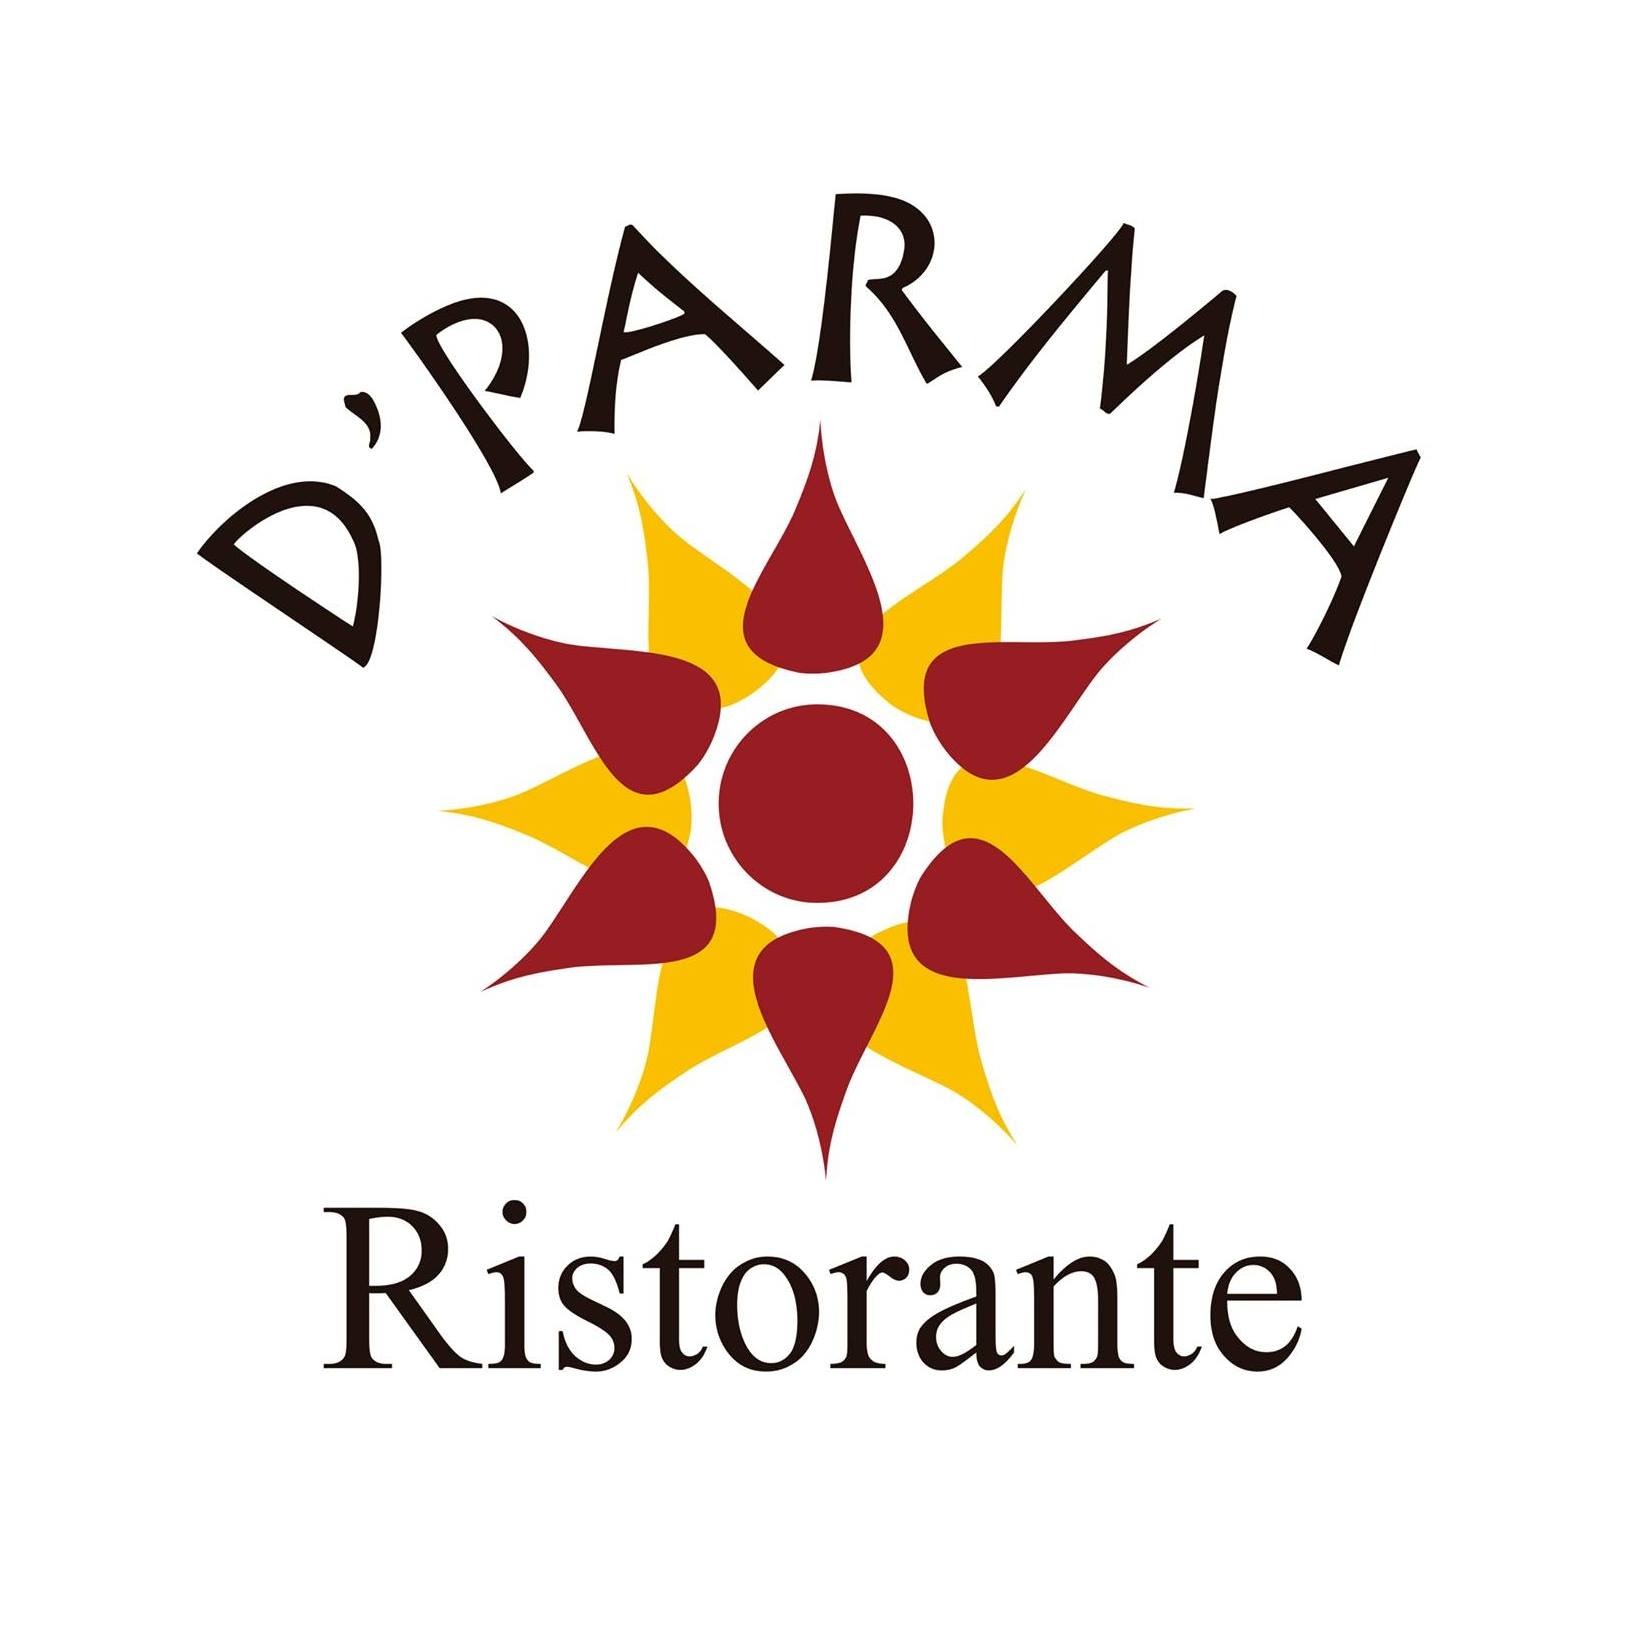 D'Parma Restaurant - Winthrop, MA 02152 - (617)846-5867 | ShowMeLocal.com